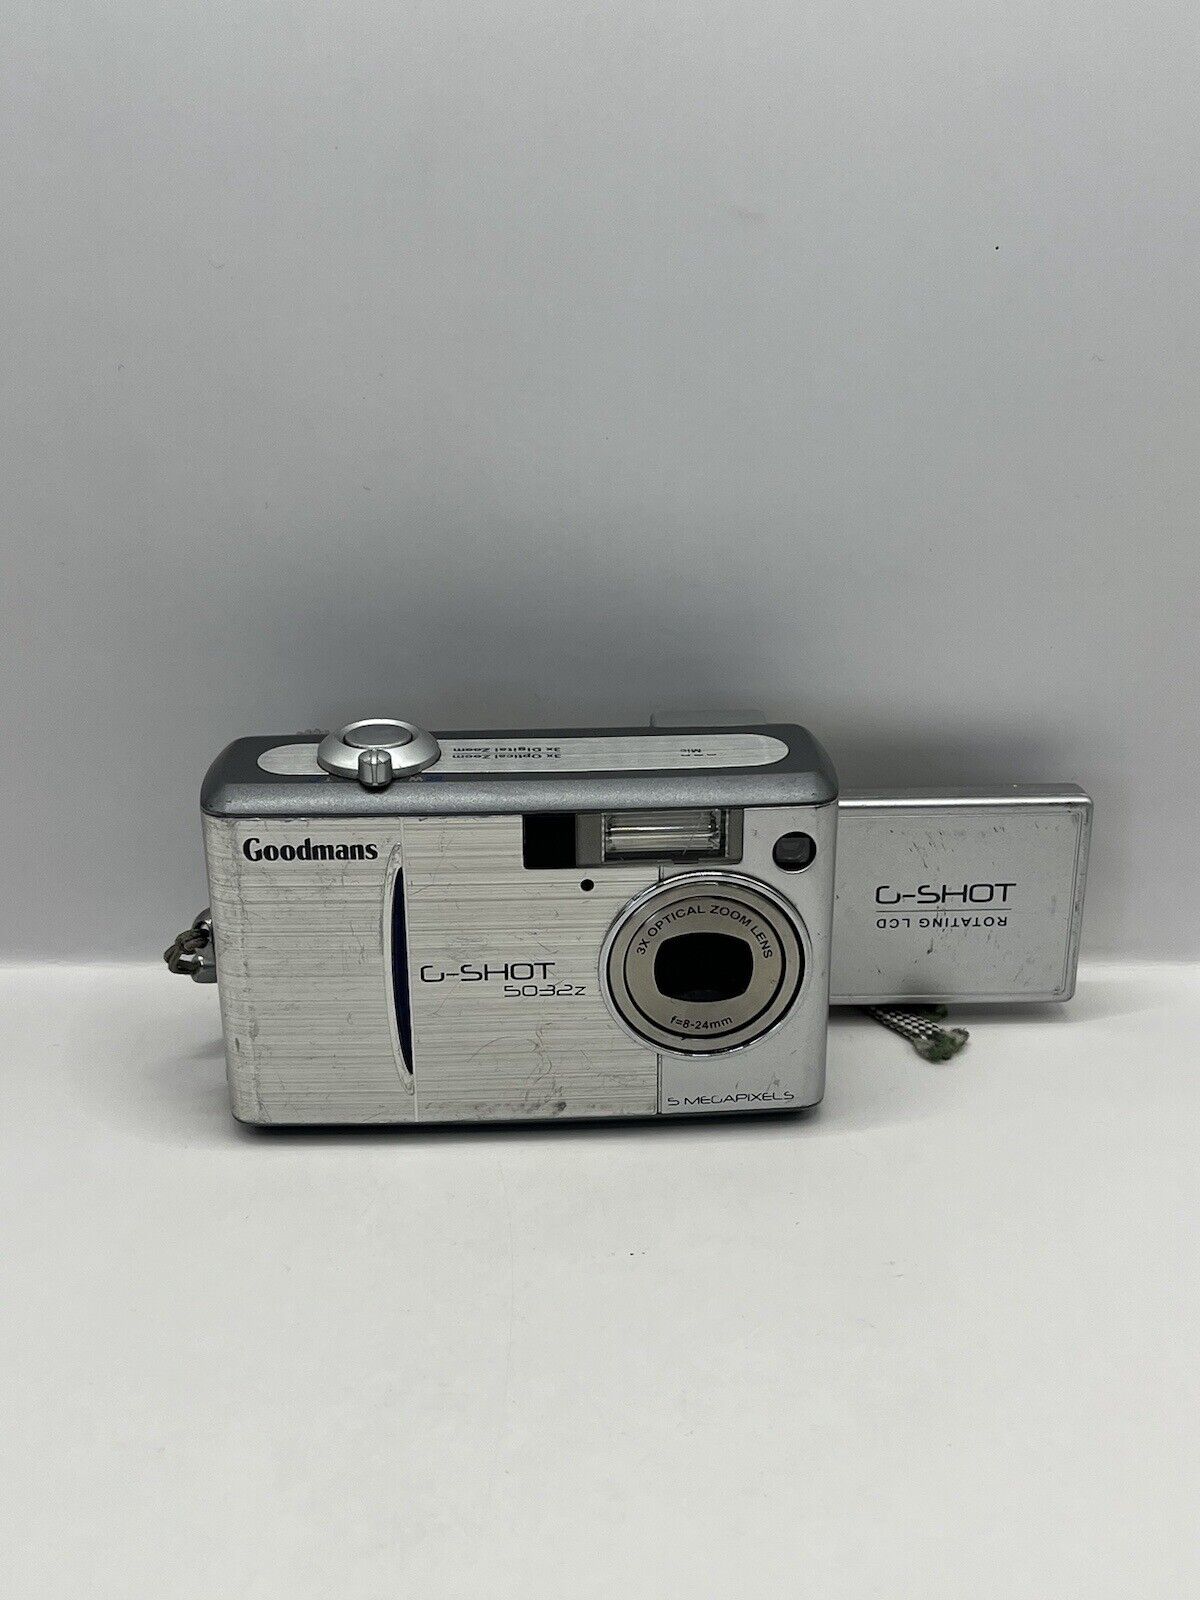 Goodmans G-Shot 5032z Silver Digital Camera Untested For Parts / Repair